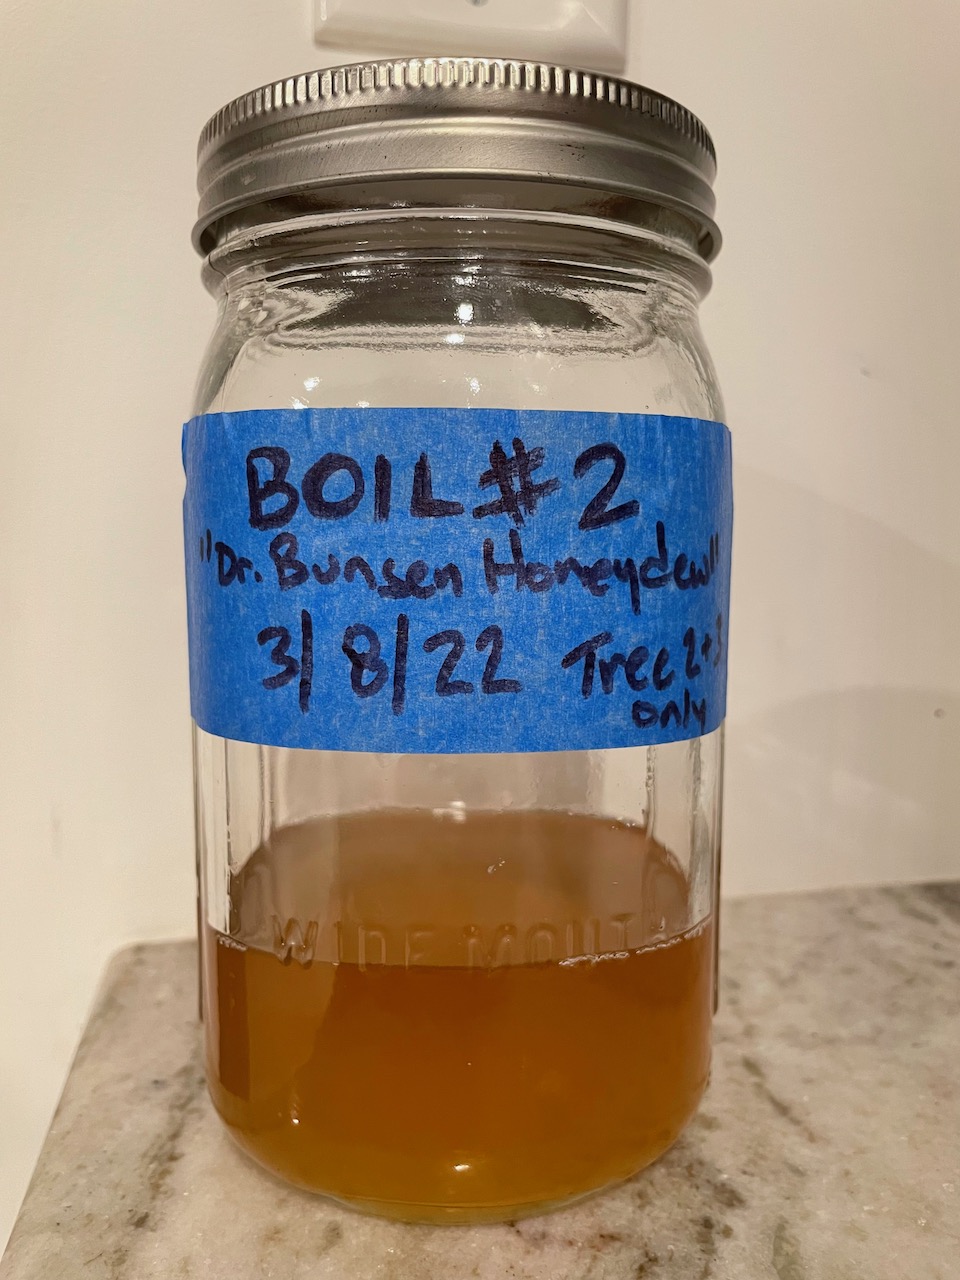 A jar of sap, labeled Boil #2 Dr Bunsen Honeydew 3/8/22